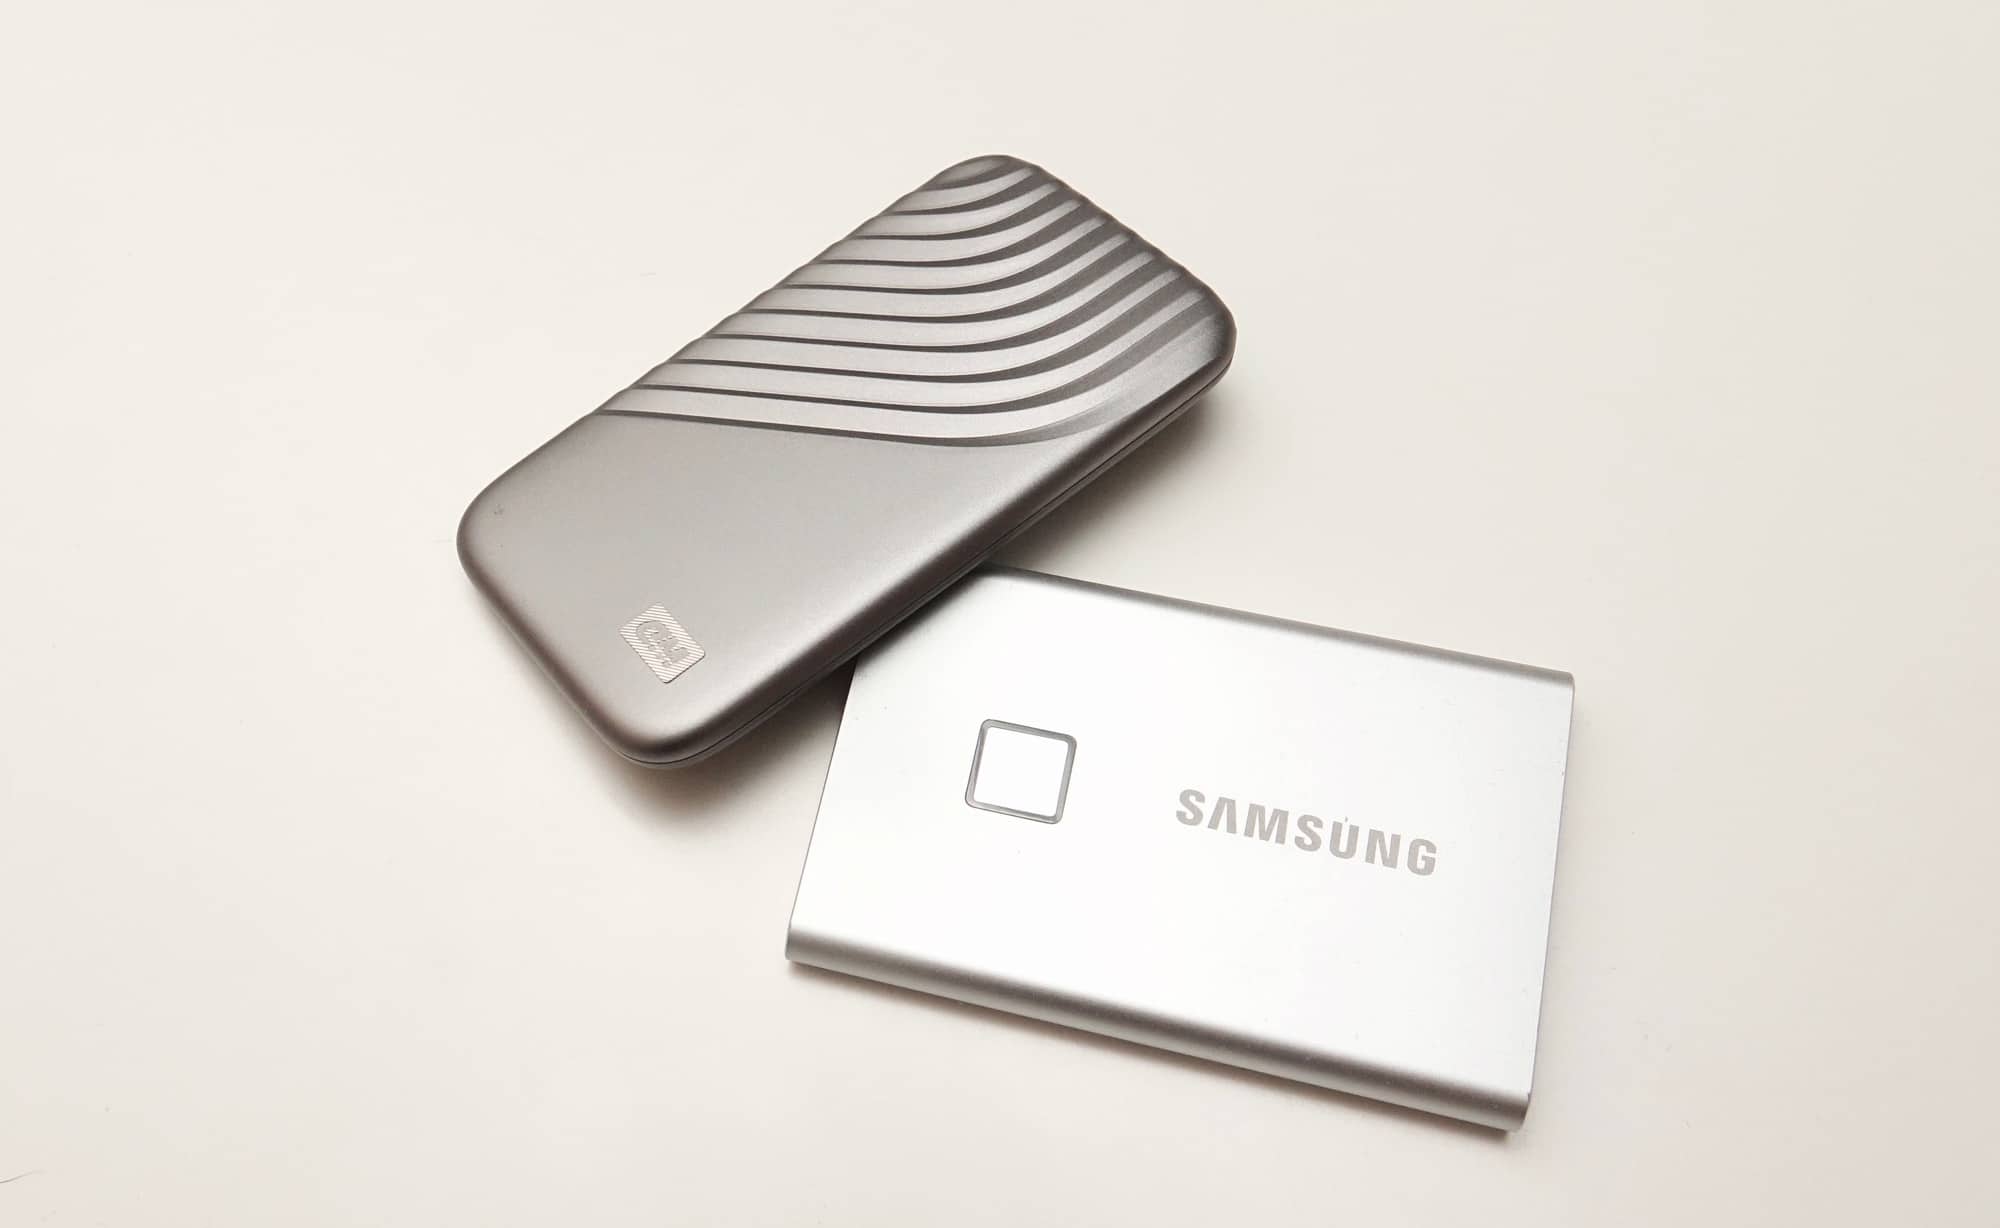 WD My Passport SSD vs Samsung T7 Touch SSD